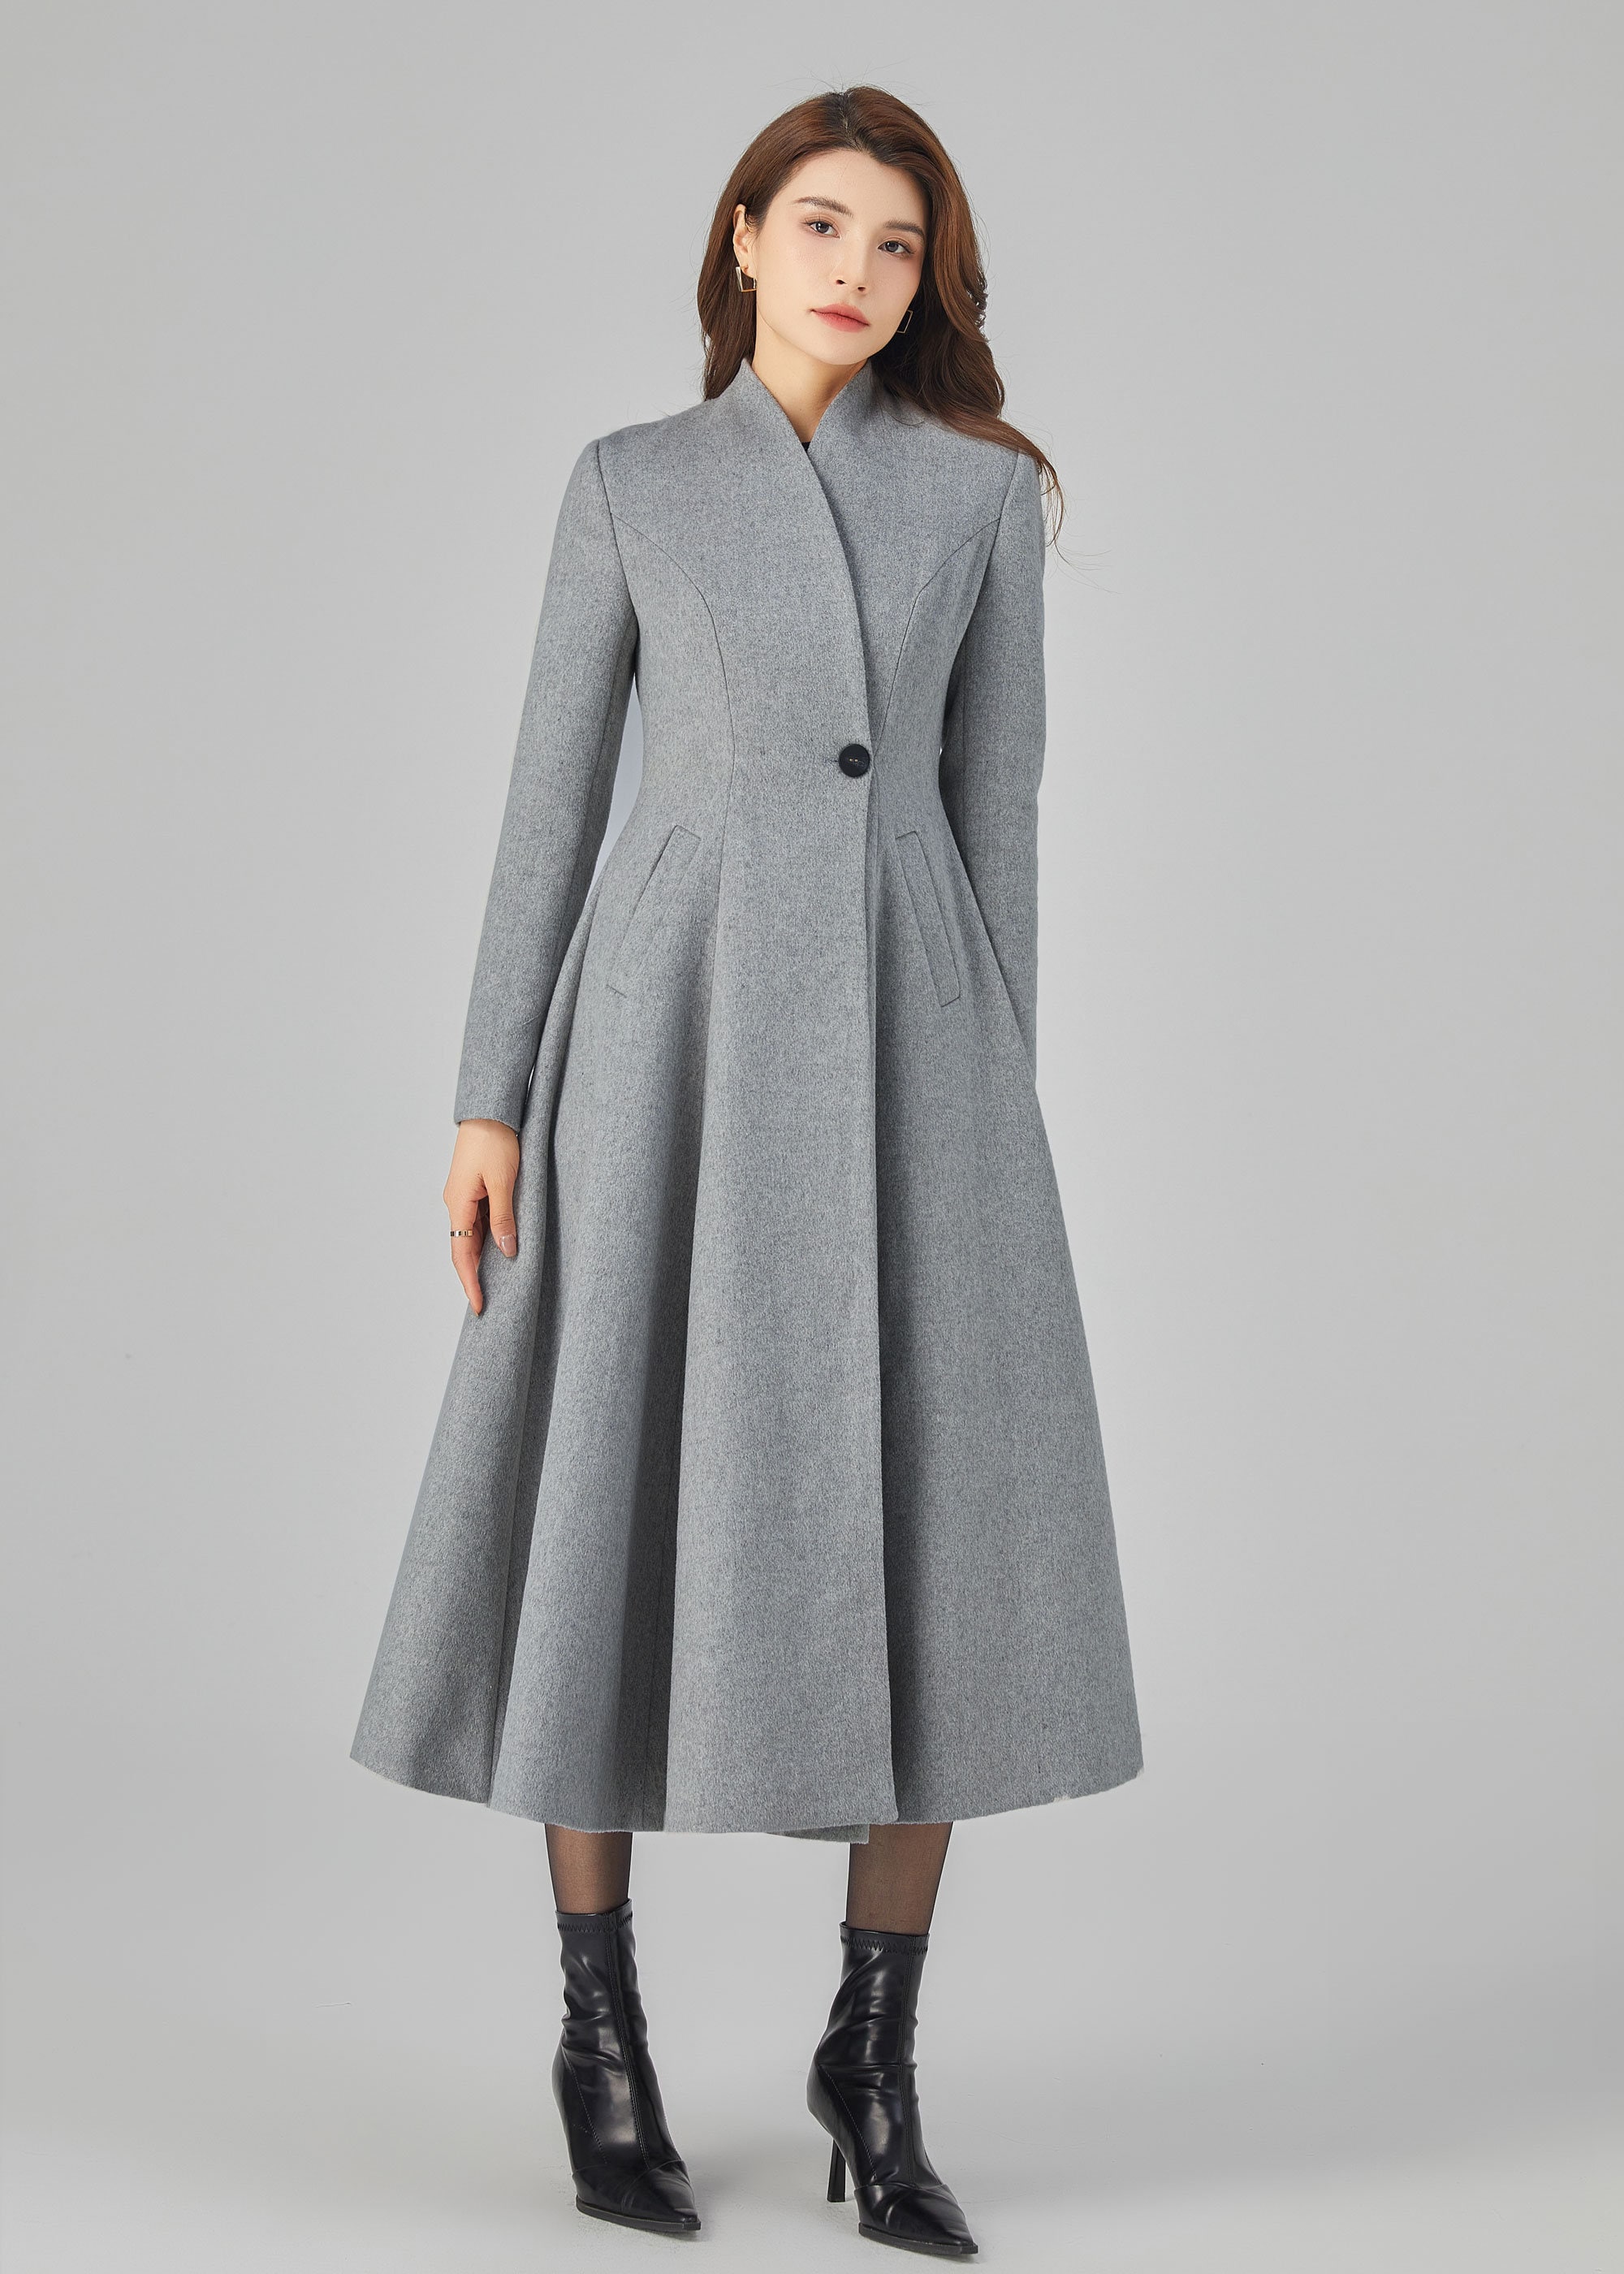 Blue Princess Wool Coat, Winter Coat Women, Trench Coat Women, Swing Coat  Dress, Fall Winter Outwear, Custom Coat Ylistyle C2461 -  Canada